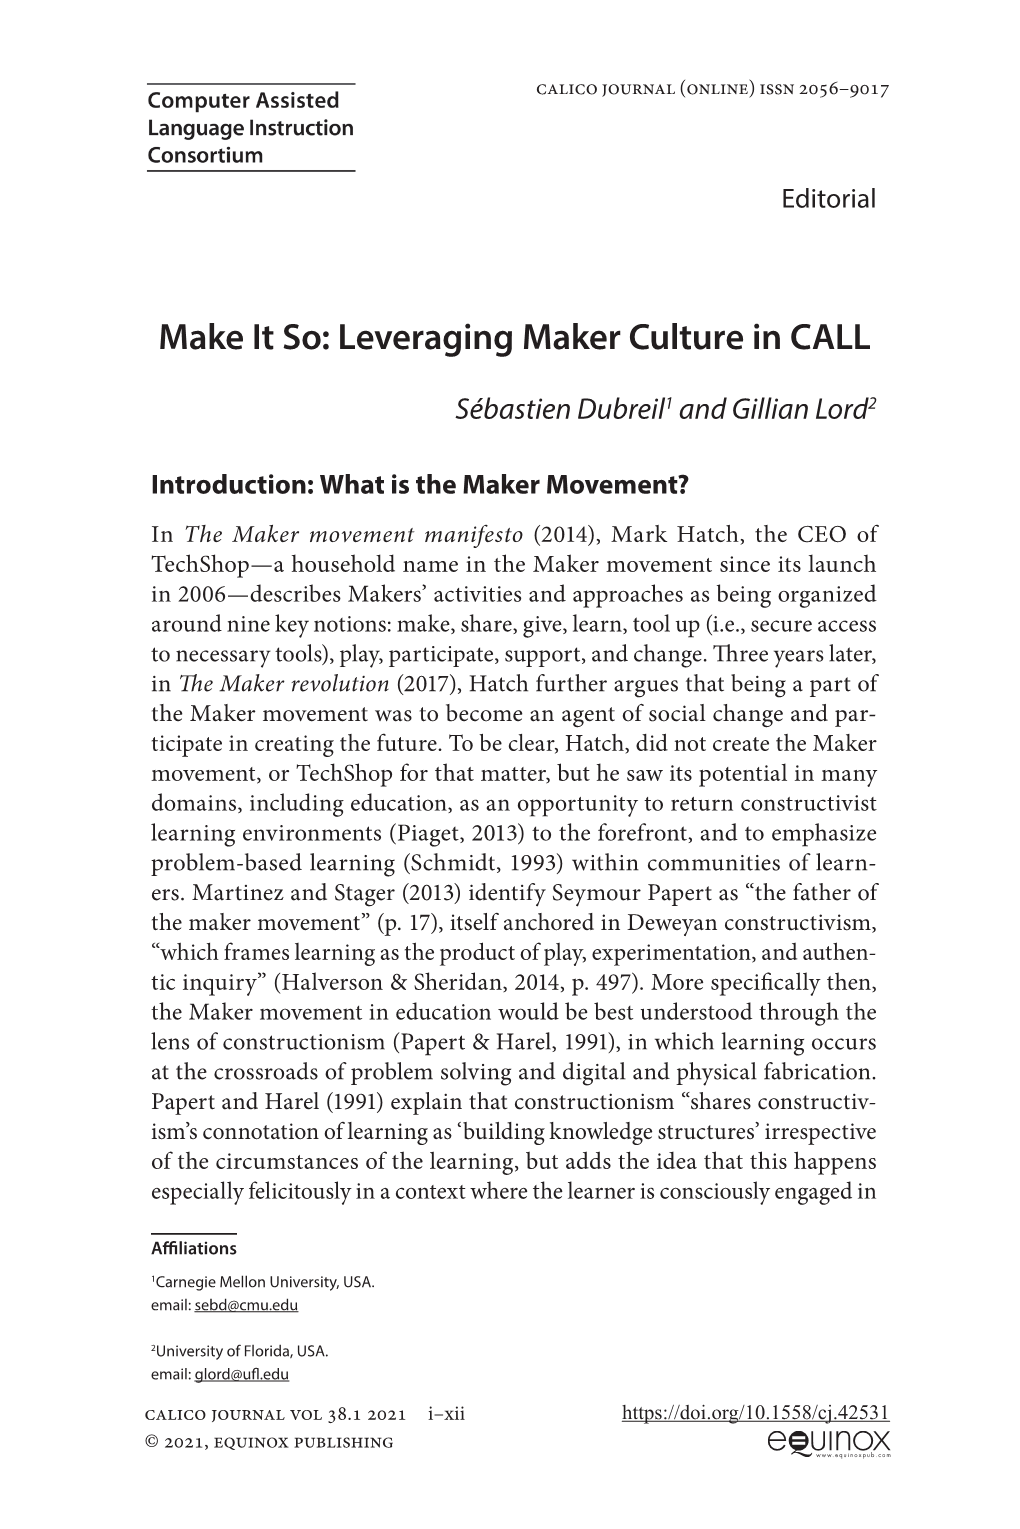 Leveraging Maker Culture in CALL